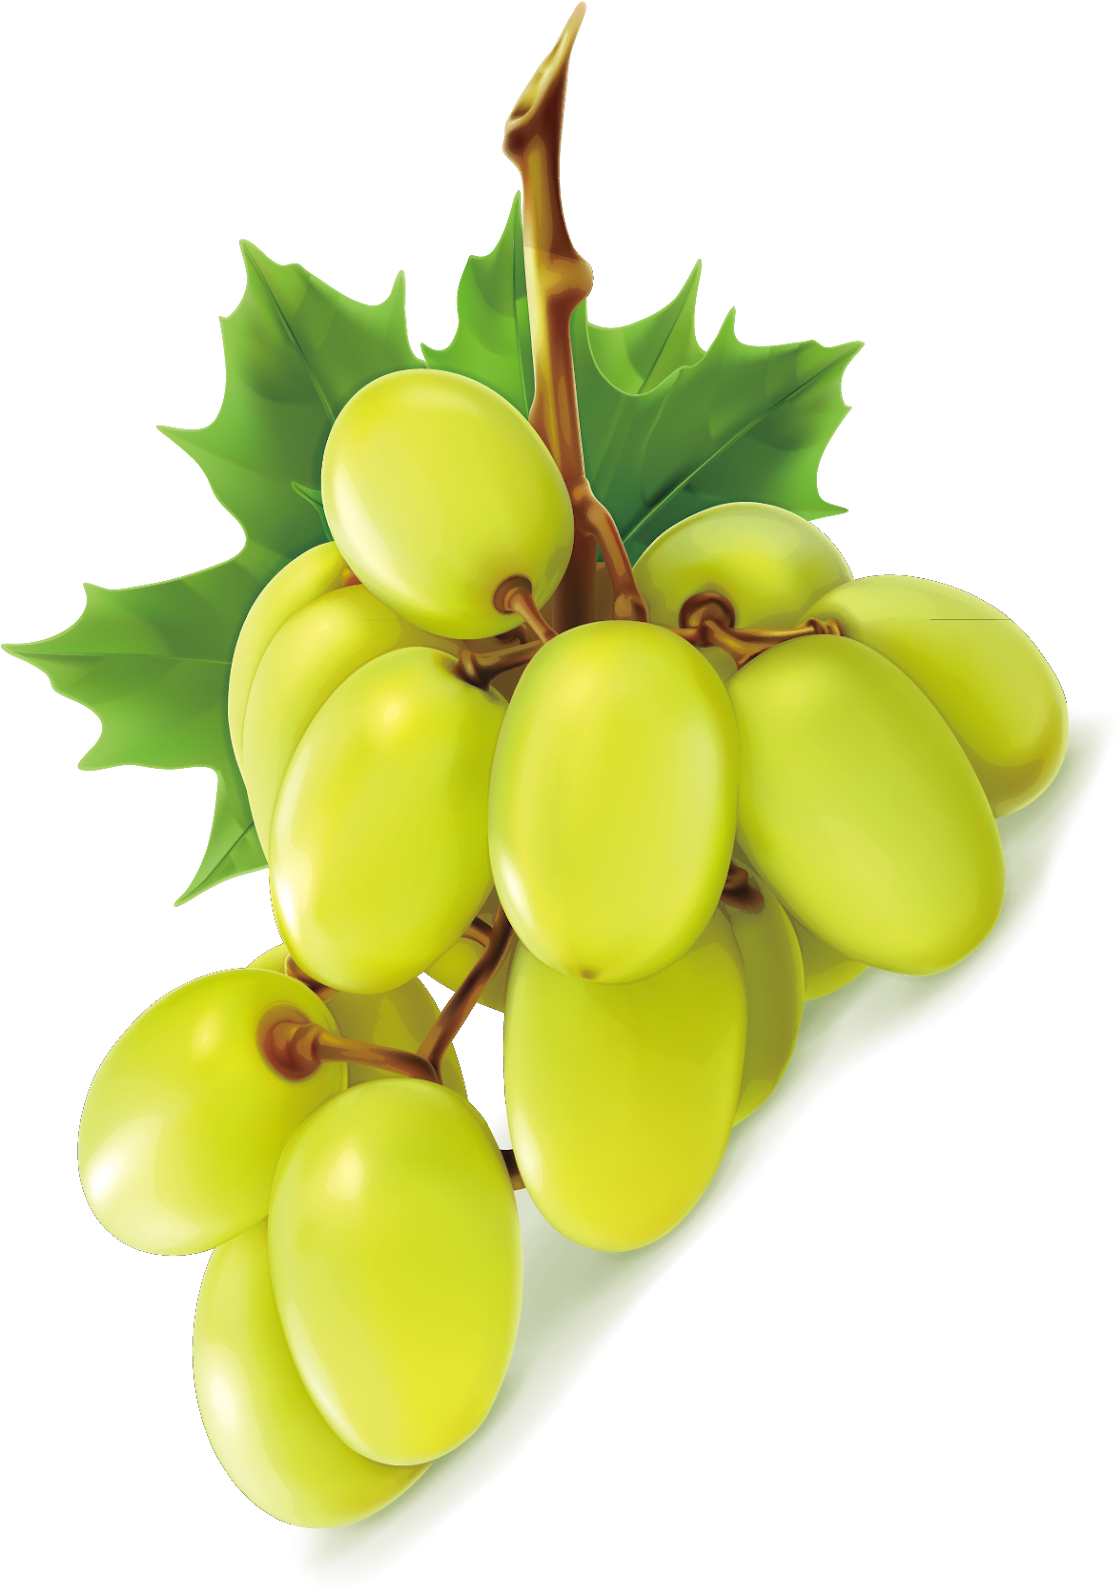 Photos Vector Green Grapes Free Download Image PNG Image